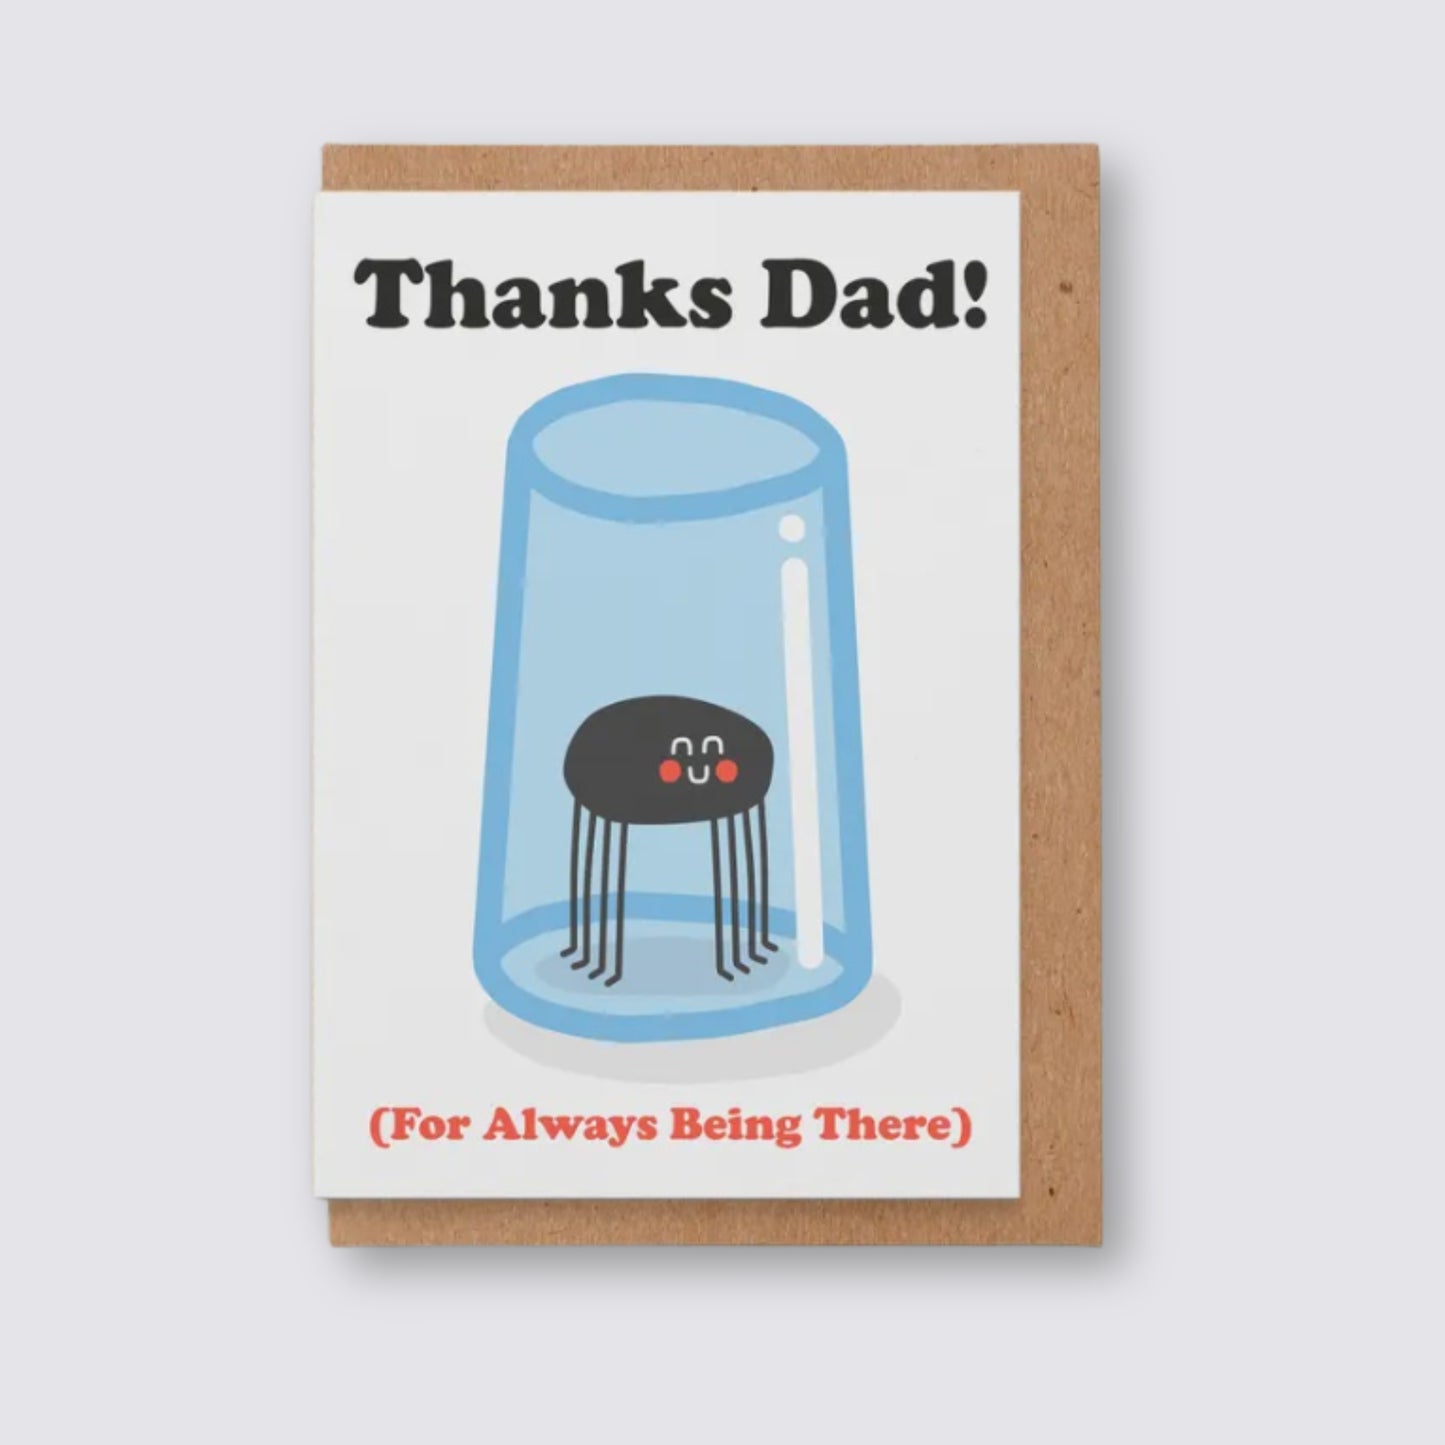 Thanks Dad Greetings Card